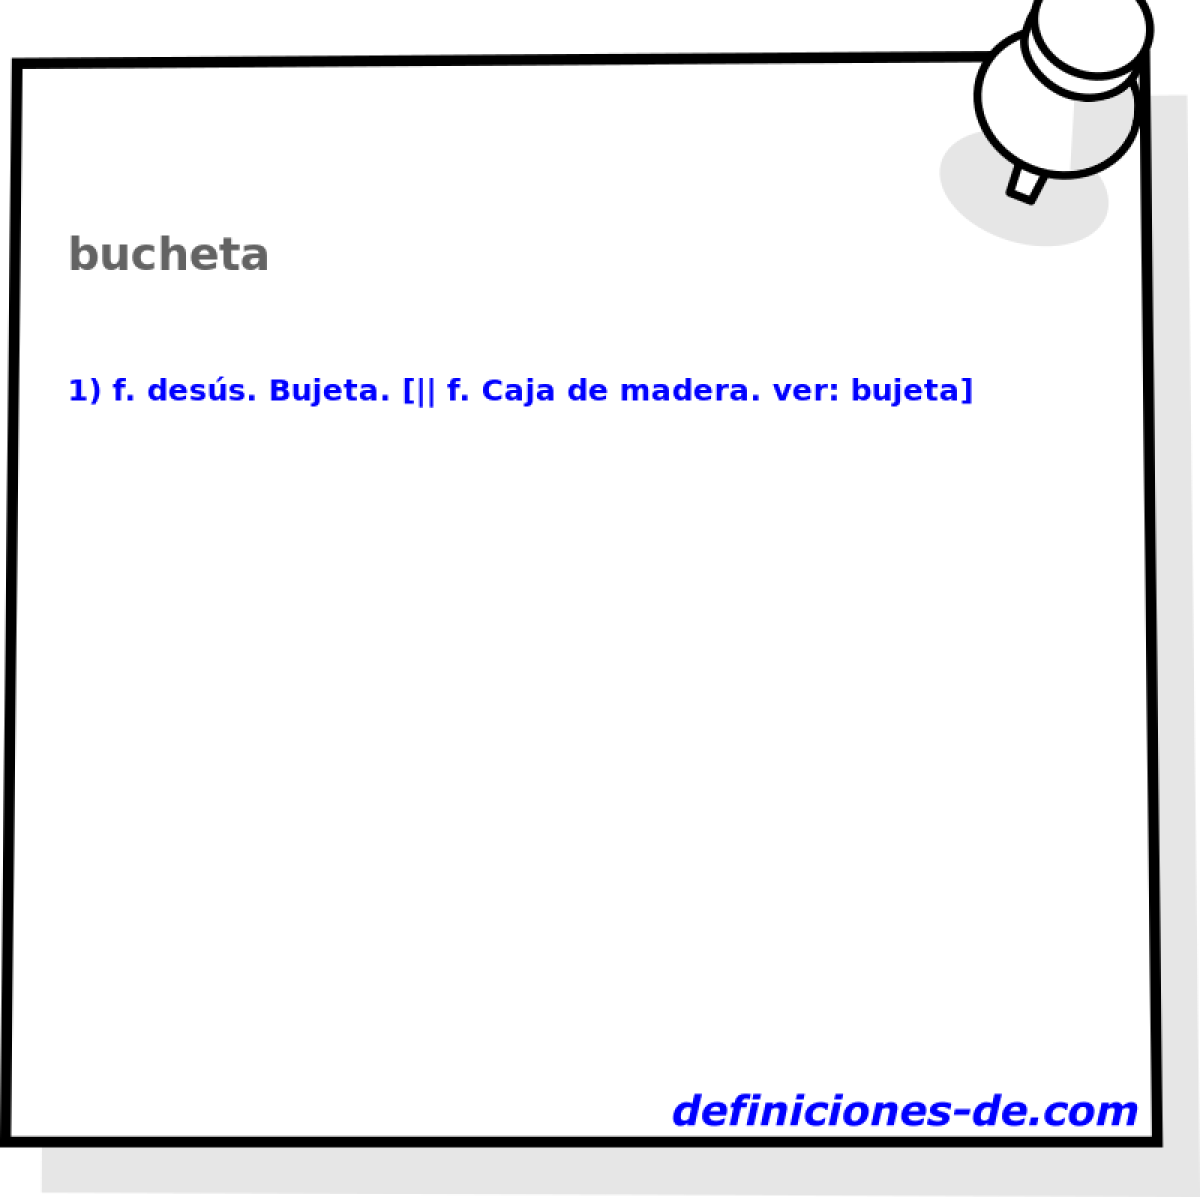 bucheta 